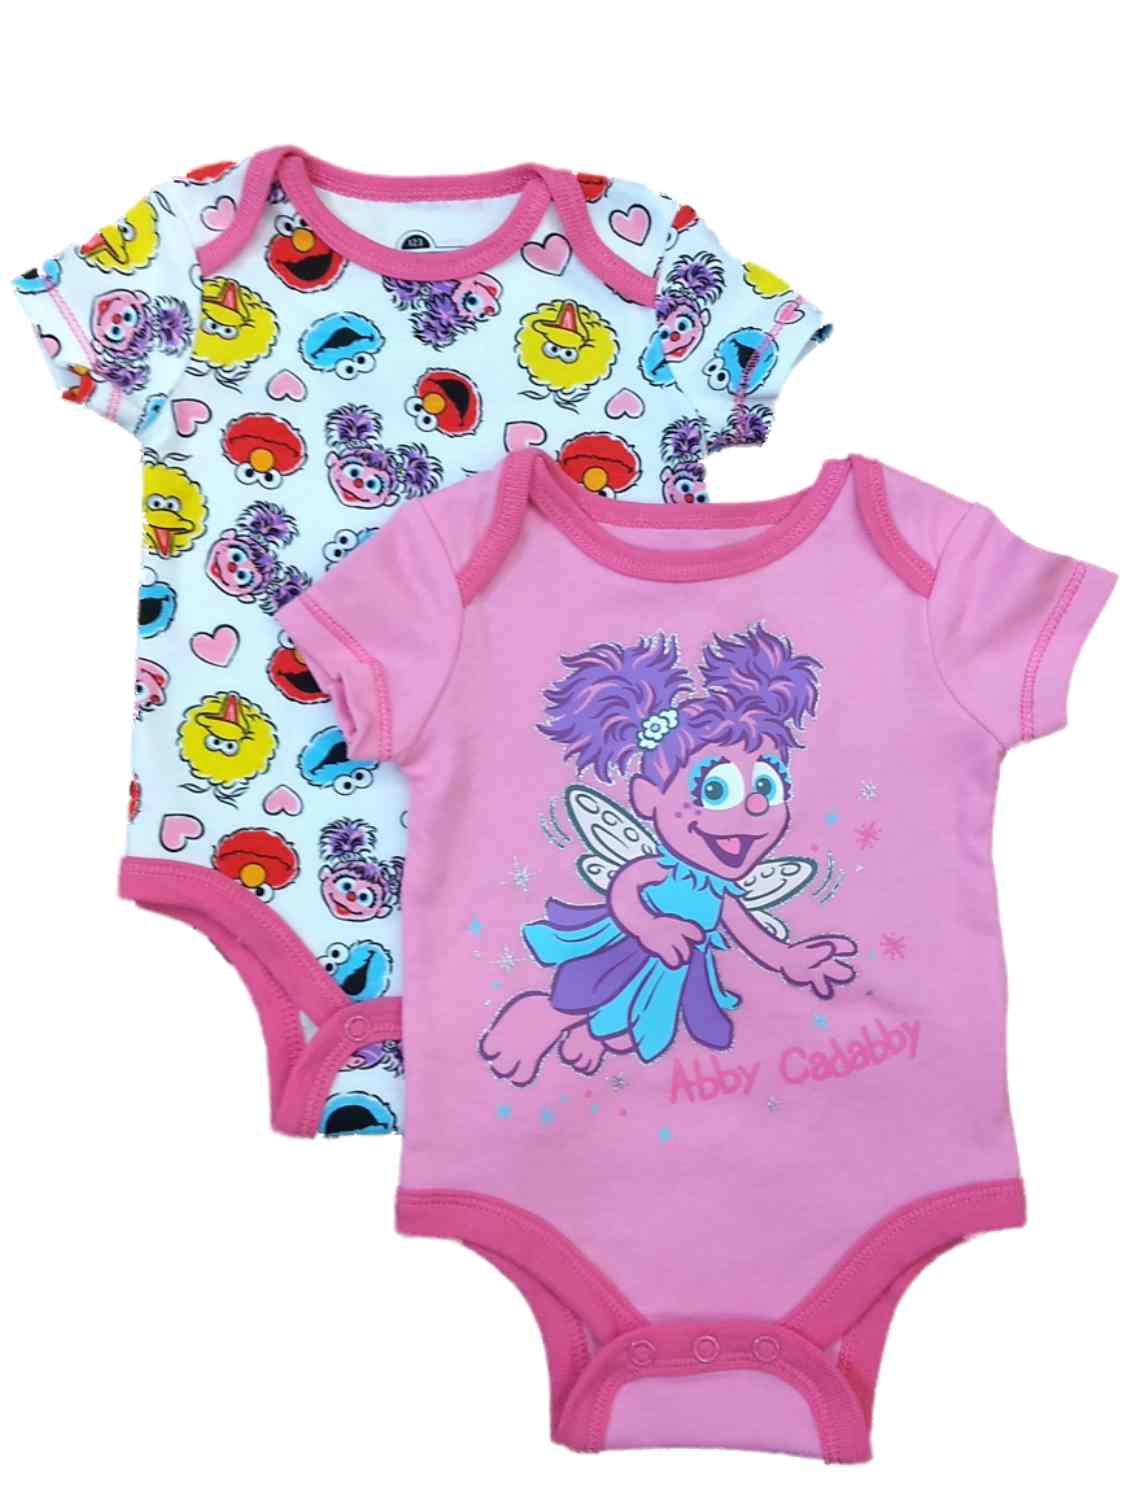 Sesame Street Infant Girls 2pc Abby Cadabby Bodysuit Set Elmo Baby Outfit